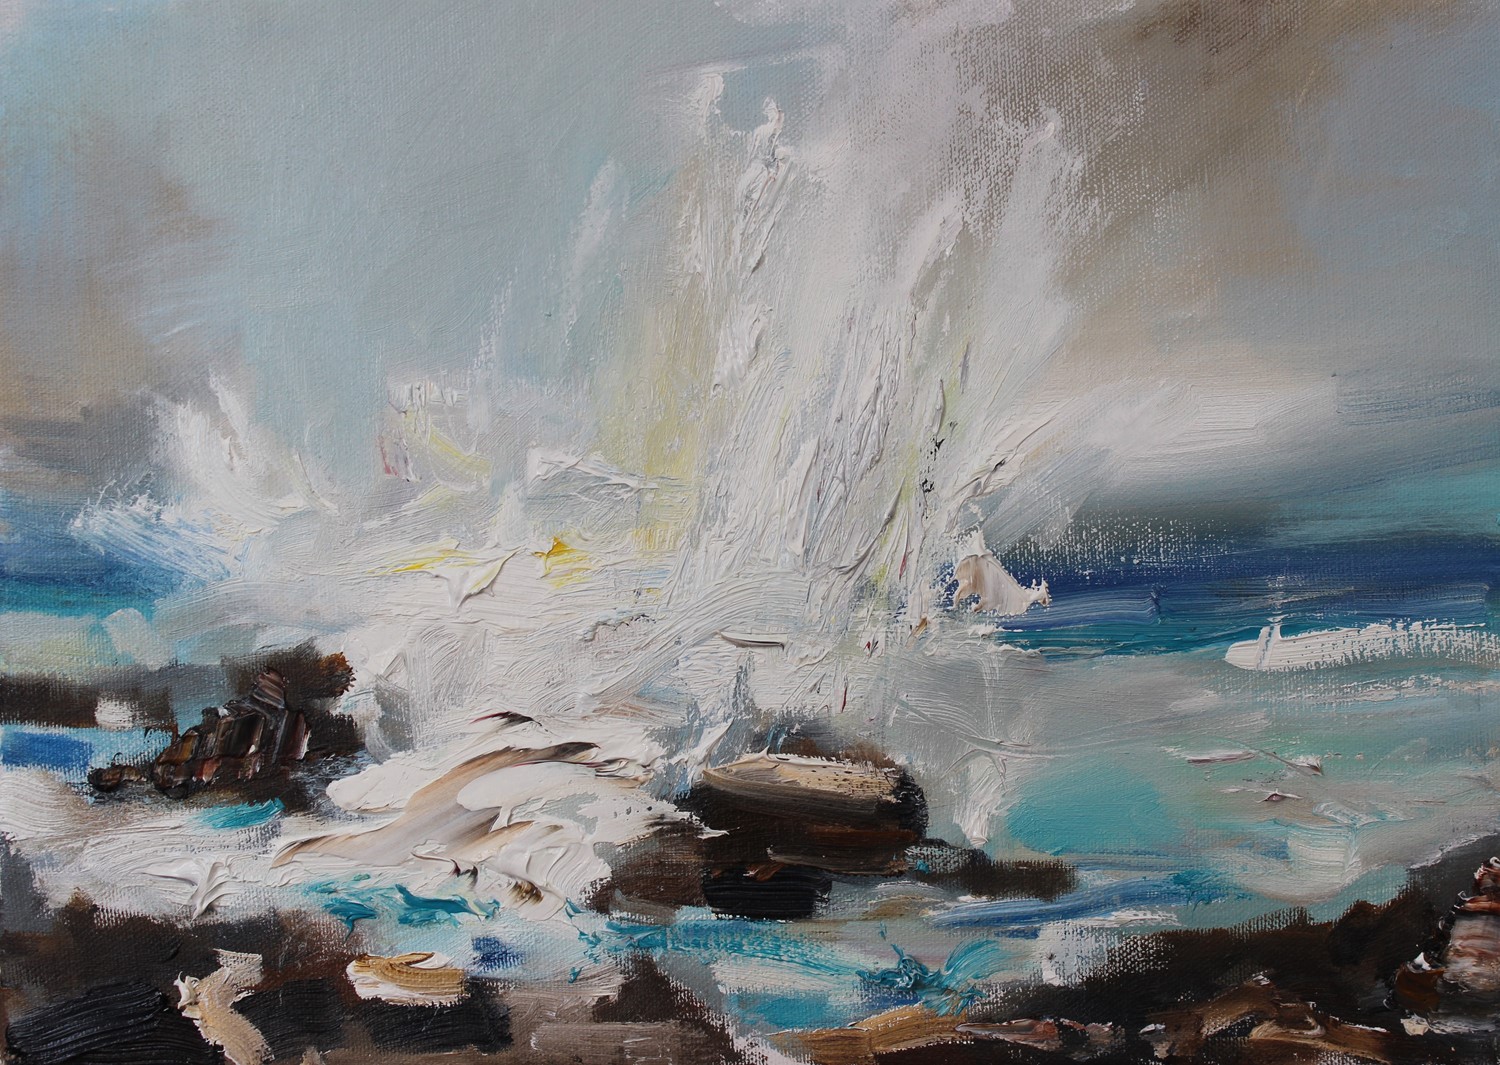 'Waves Crashing Ashore' by artist Rosanne Barr